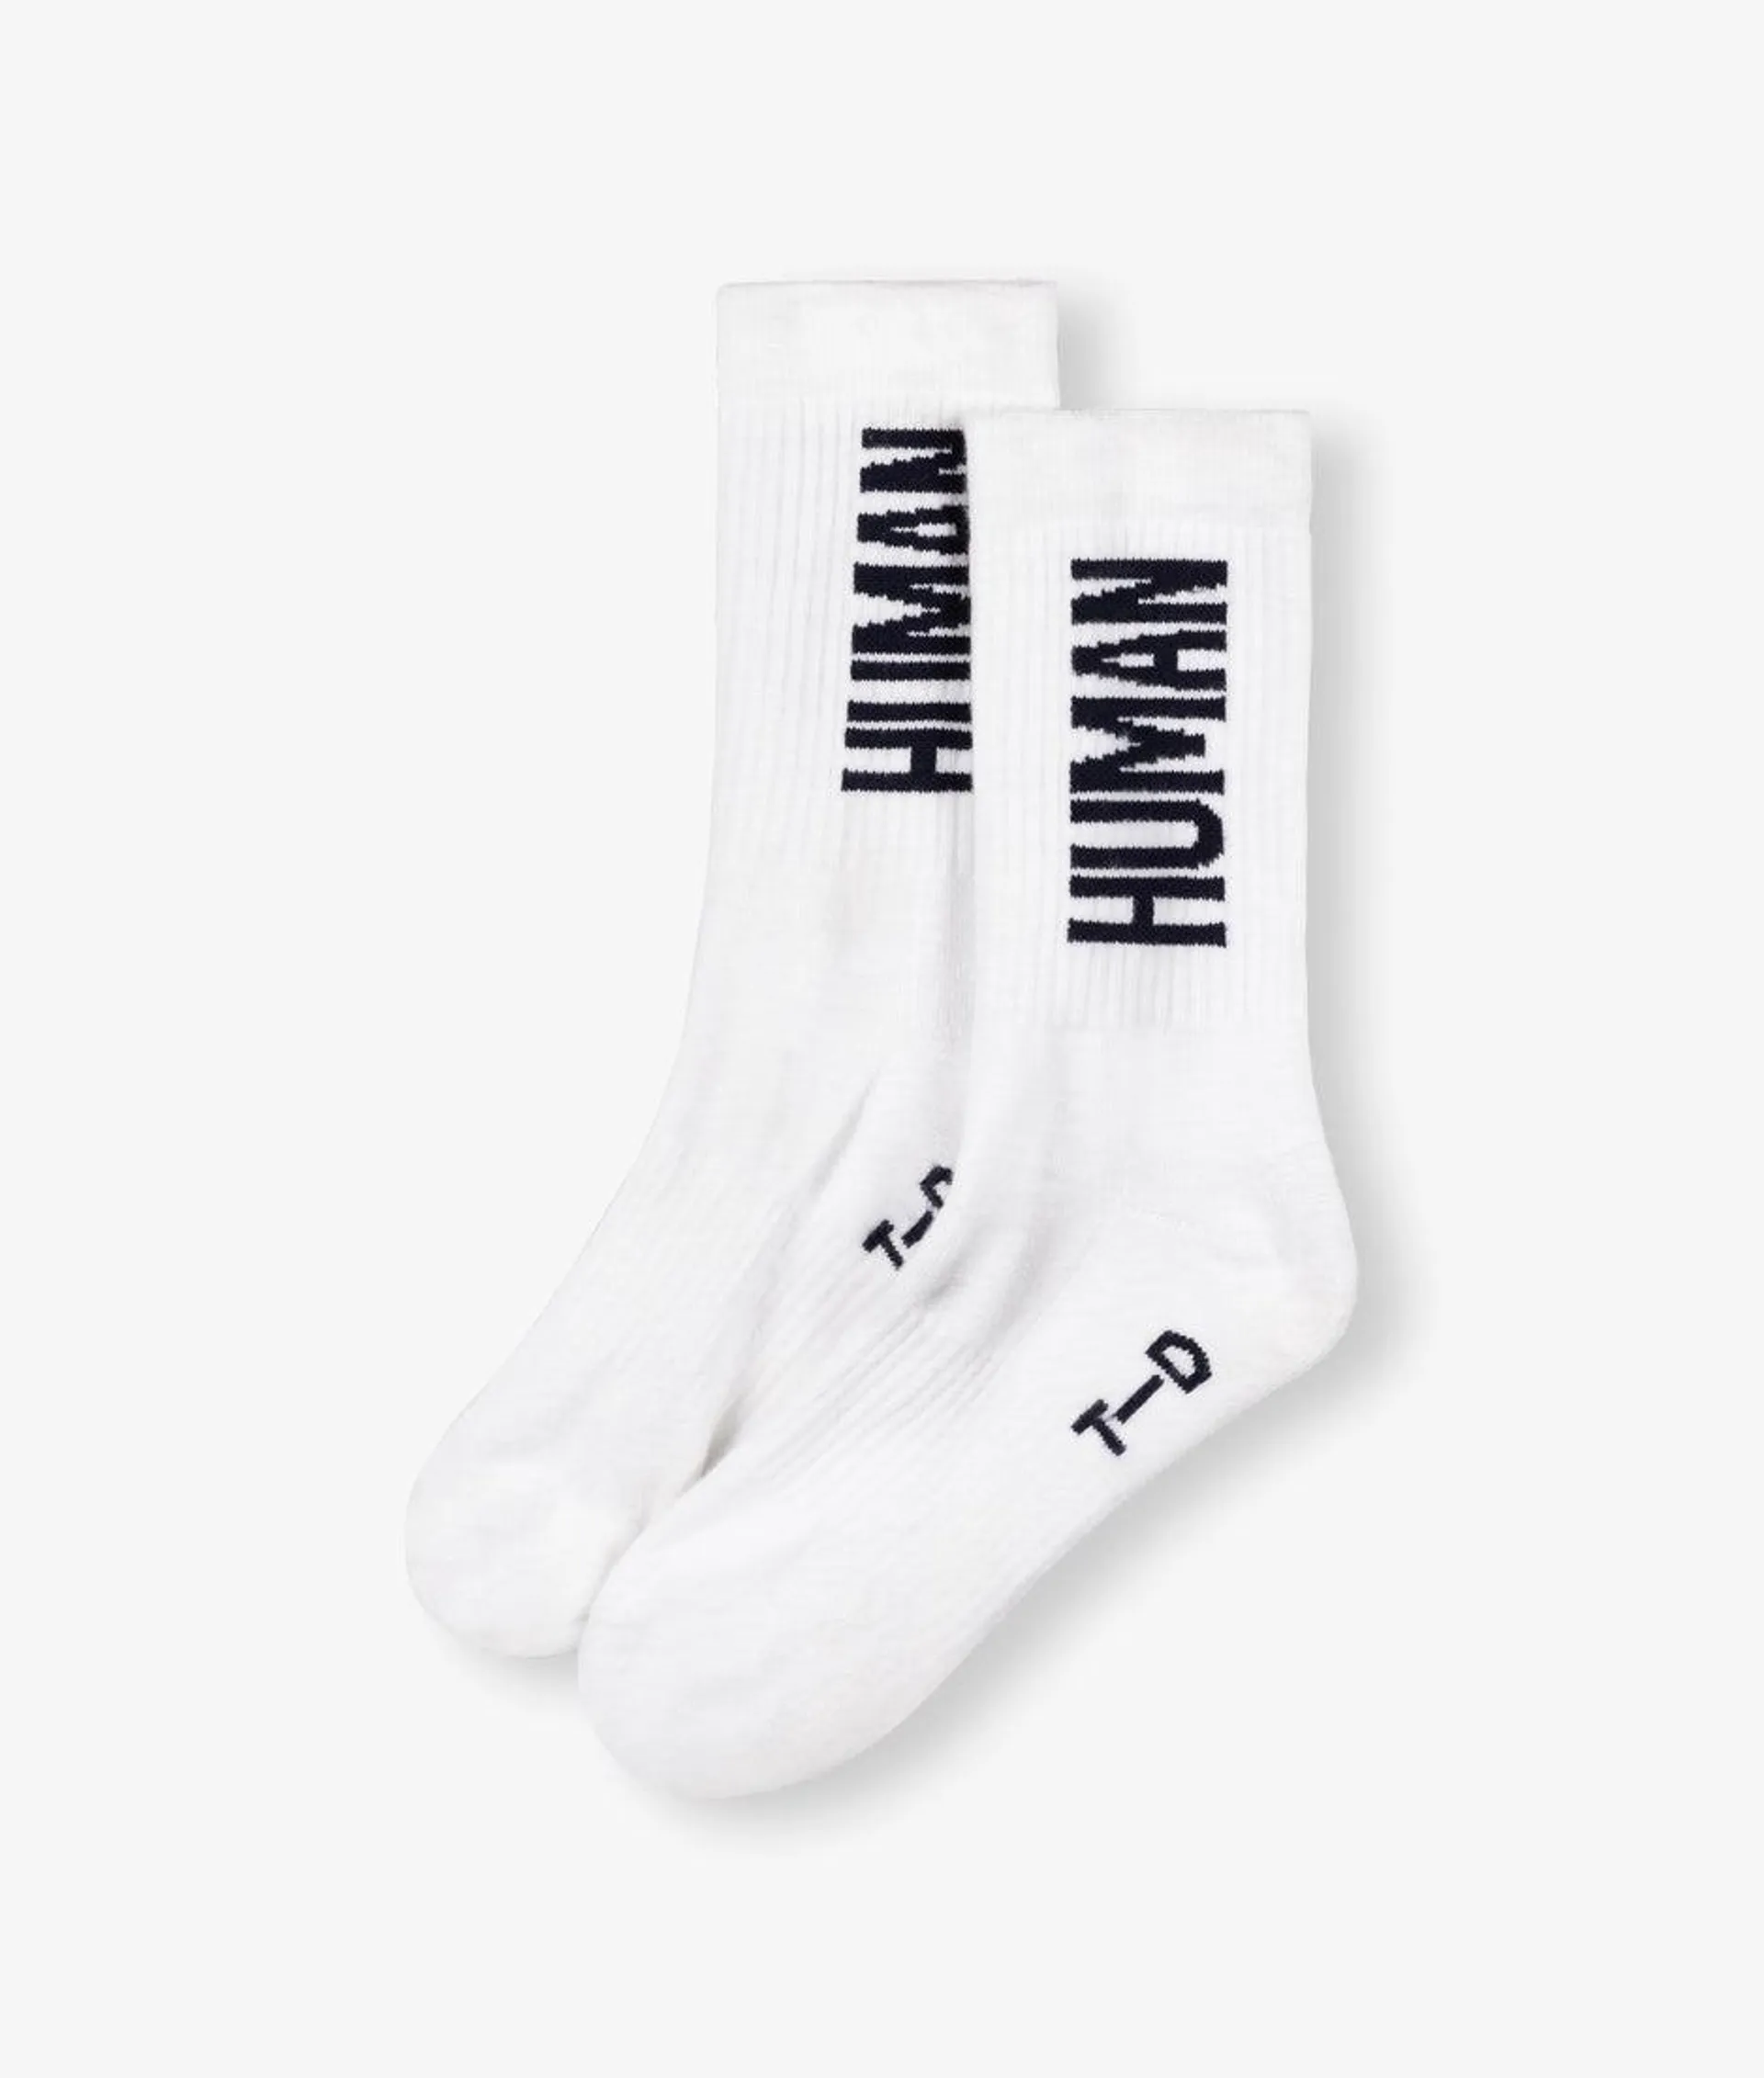 Human socks